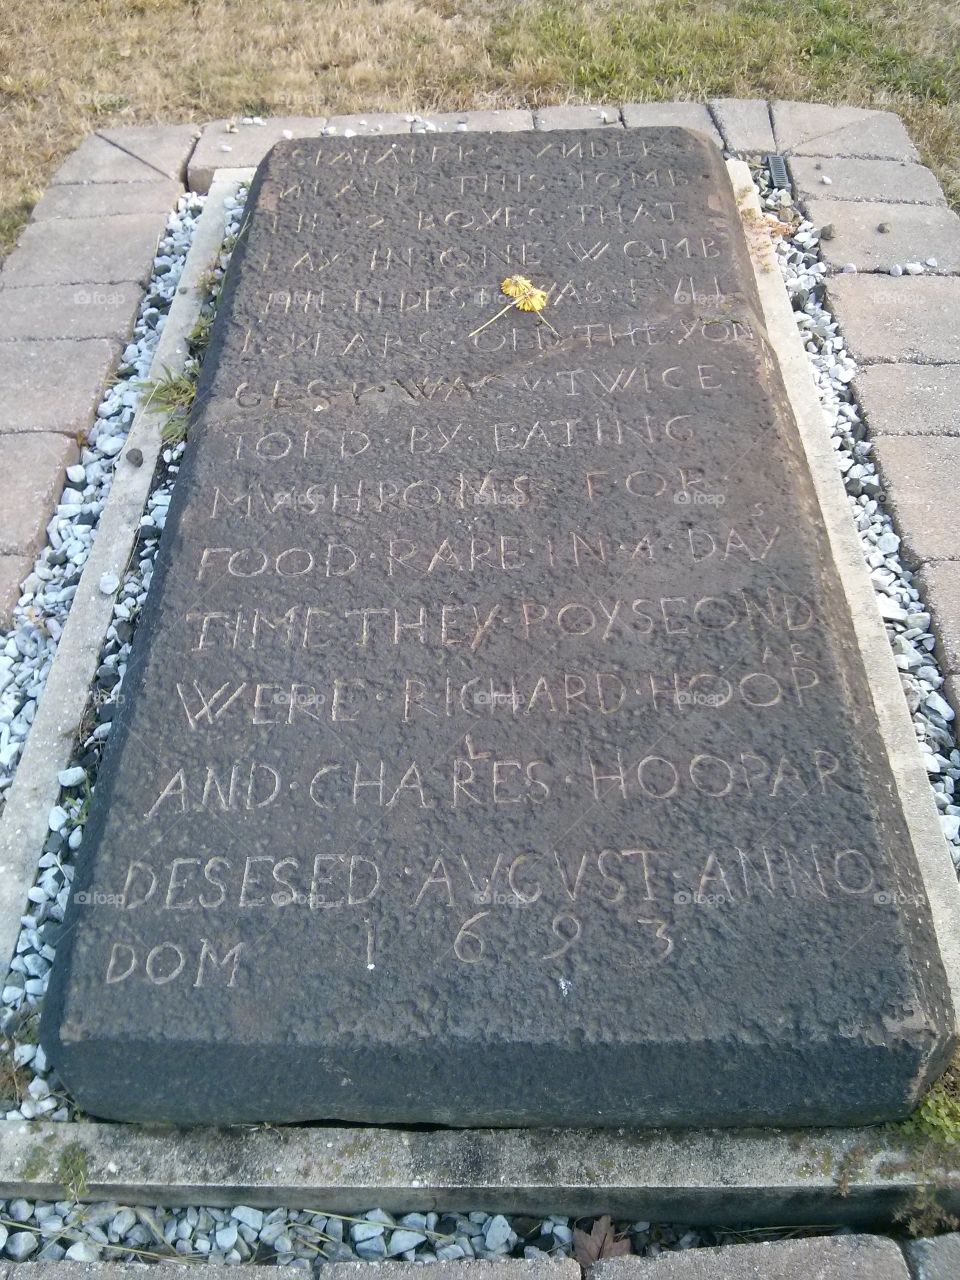 Piscatawaytown Burial ground tombstone